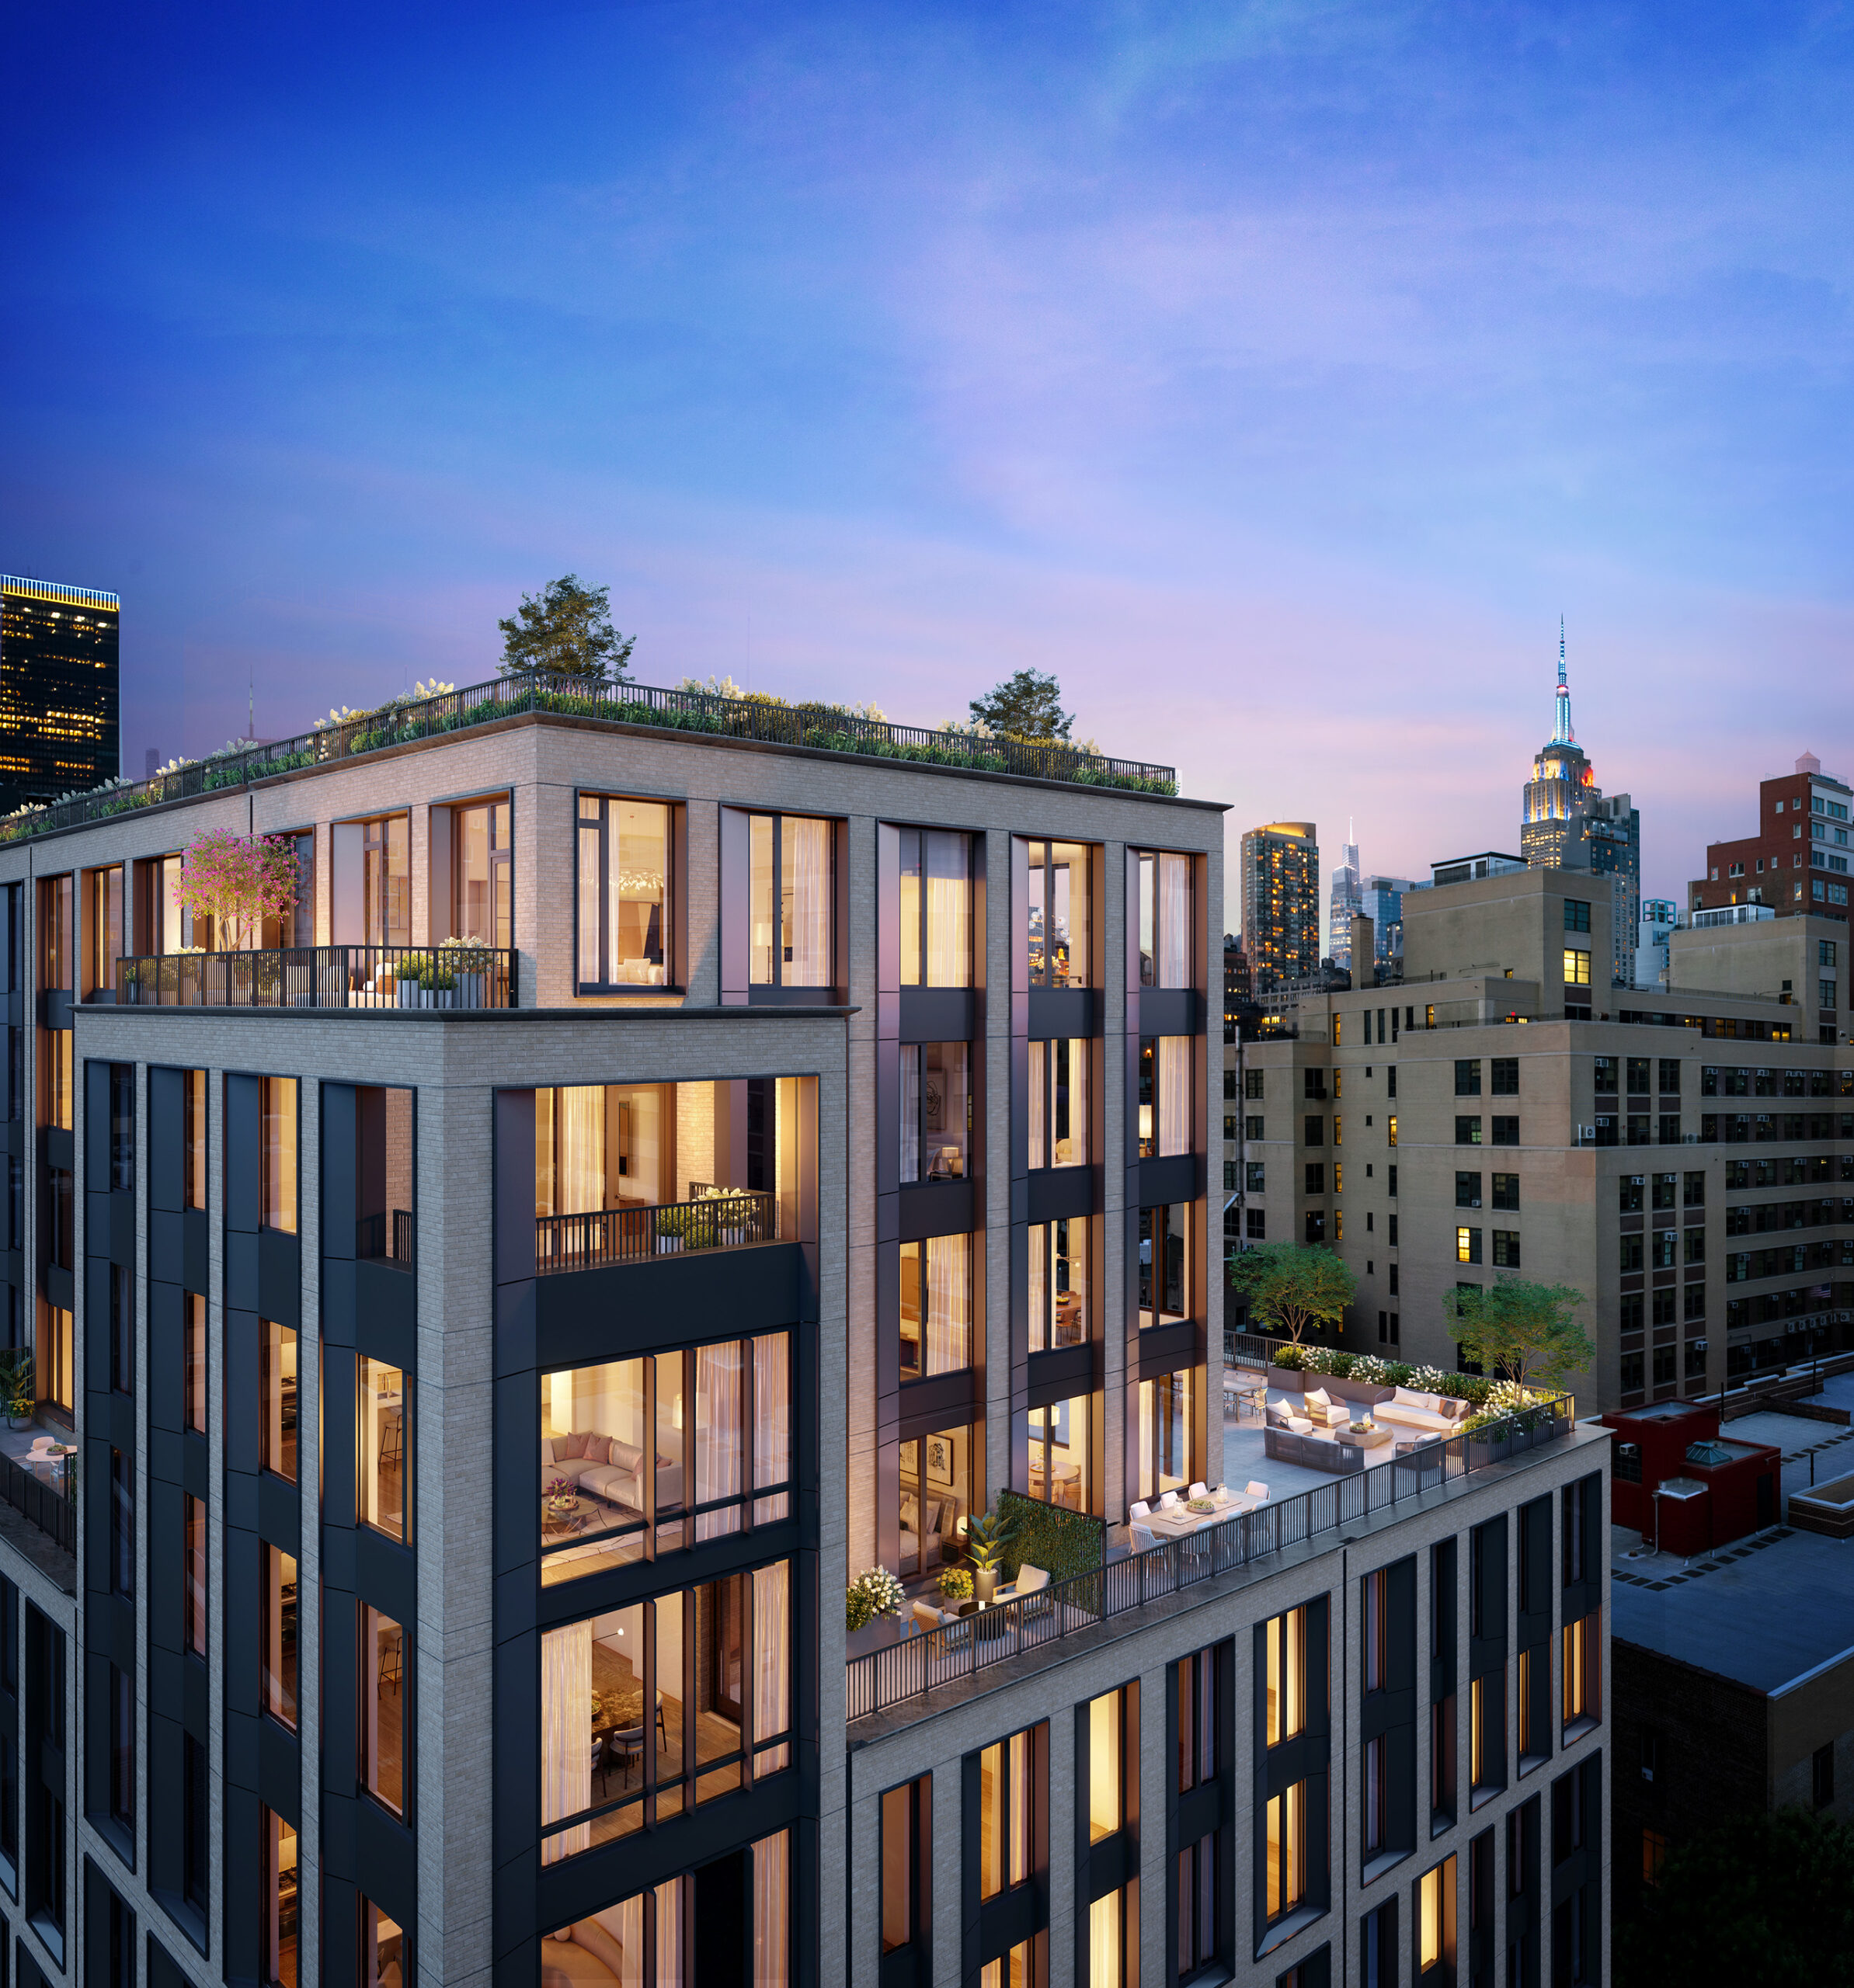 The Chelsea Canvas luxury apartment building